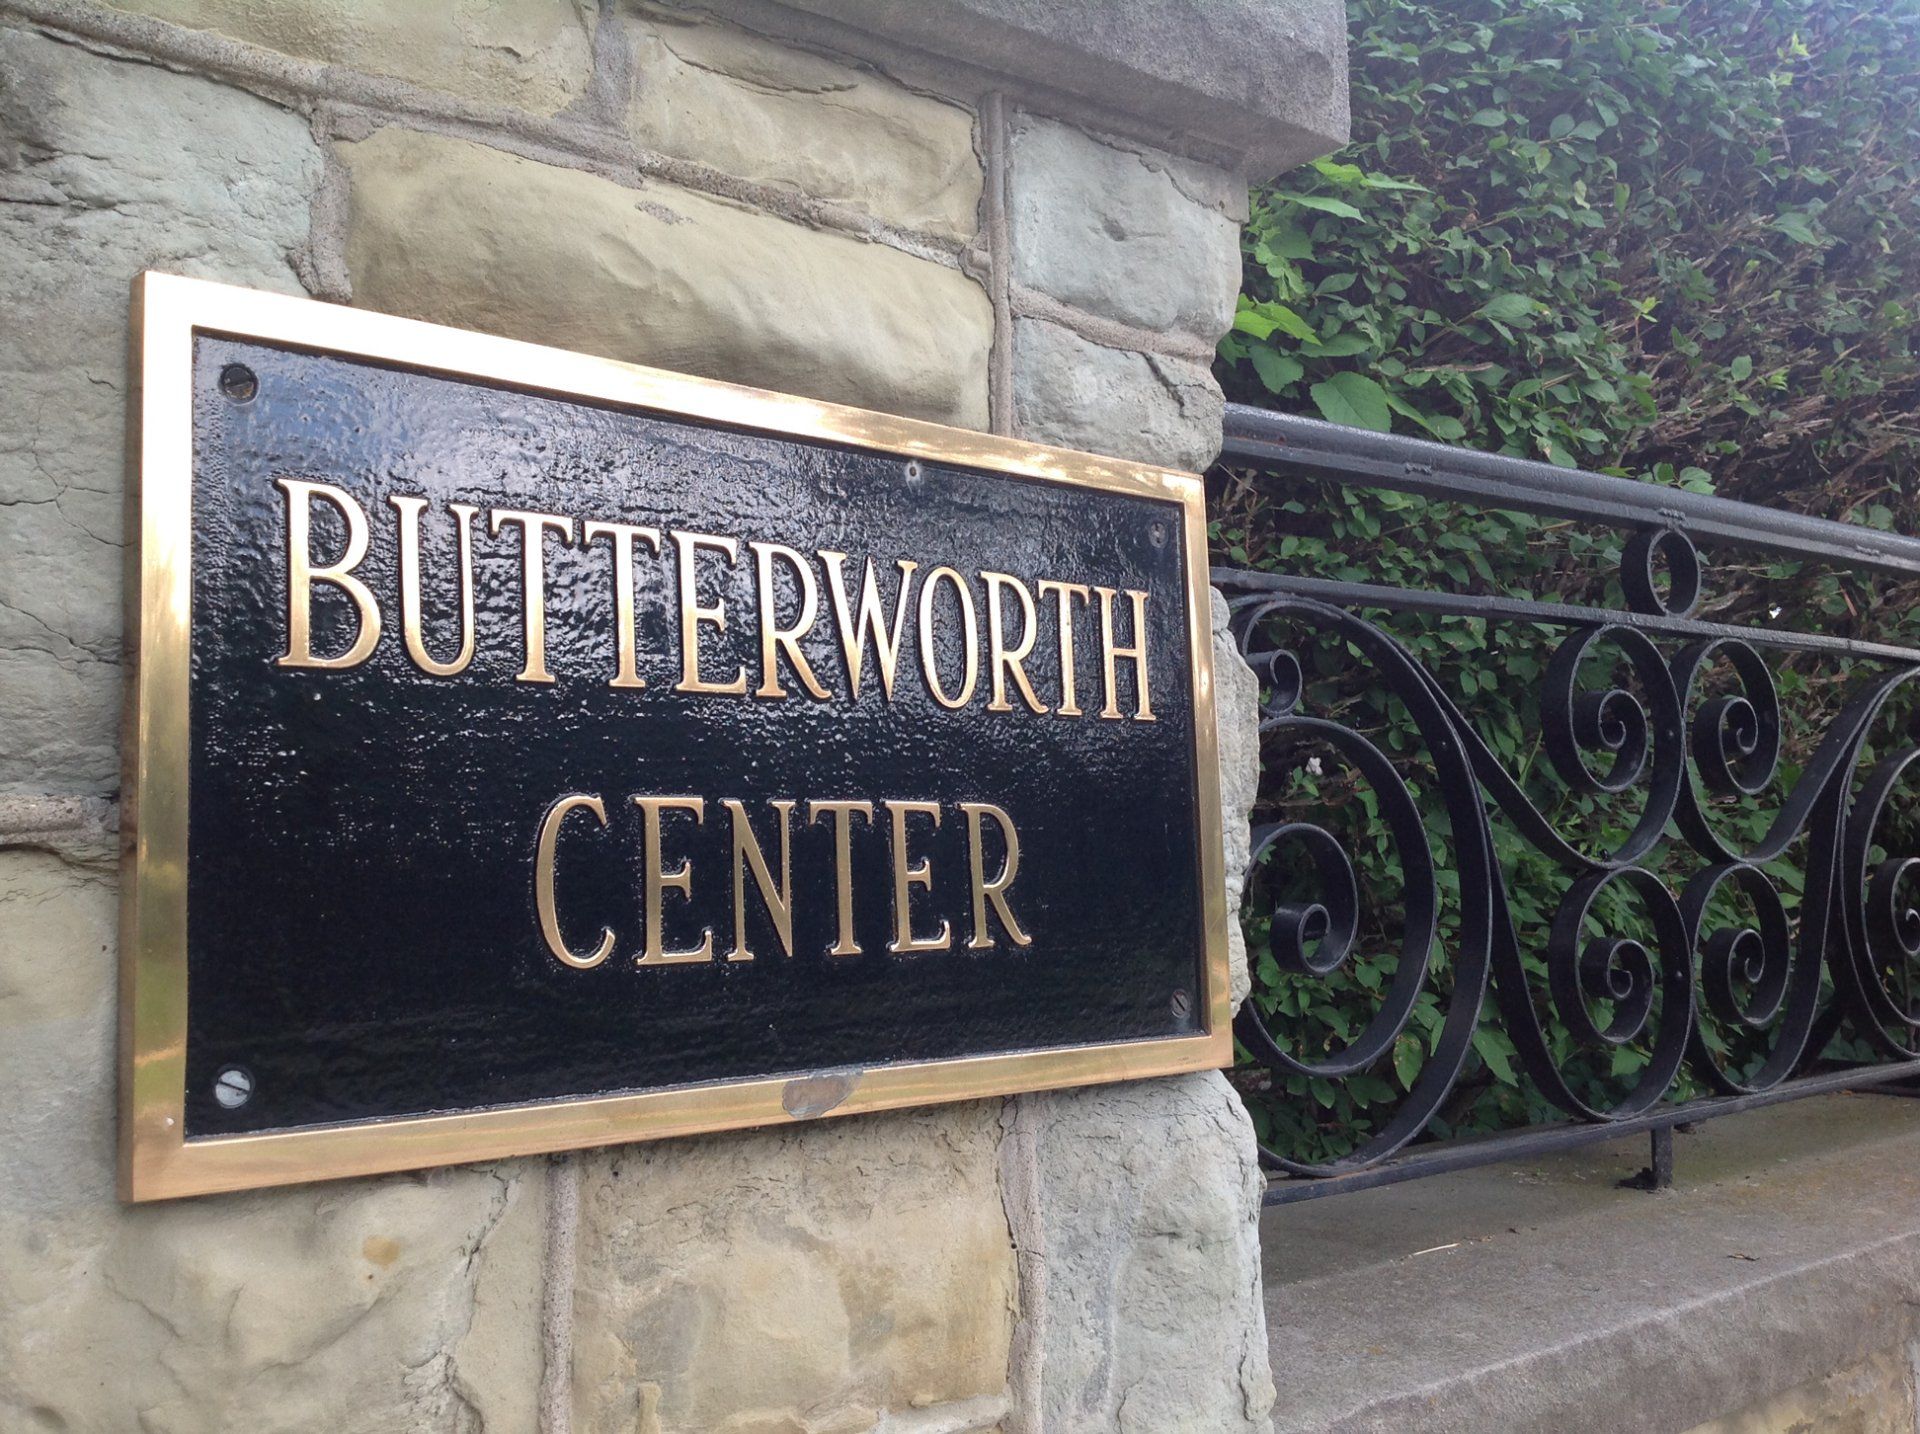 Butterworth Center images 3